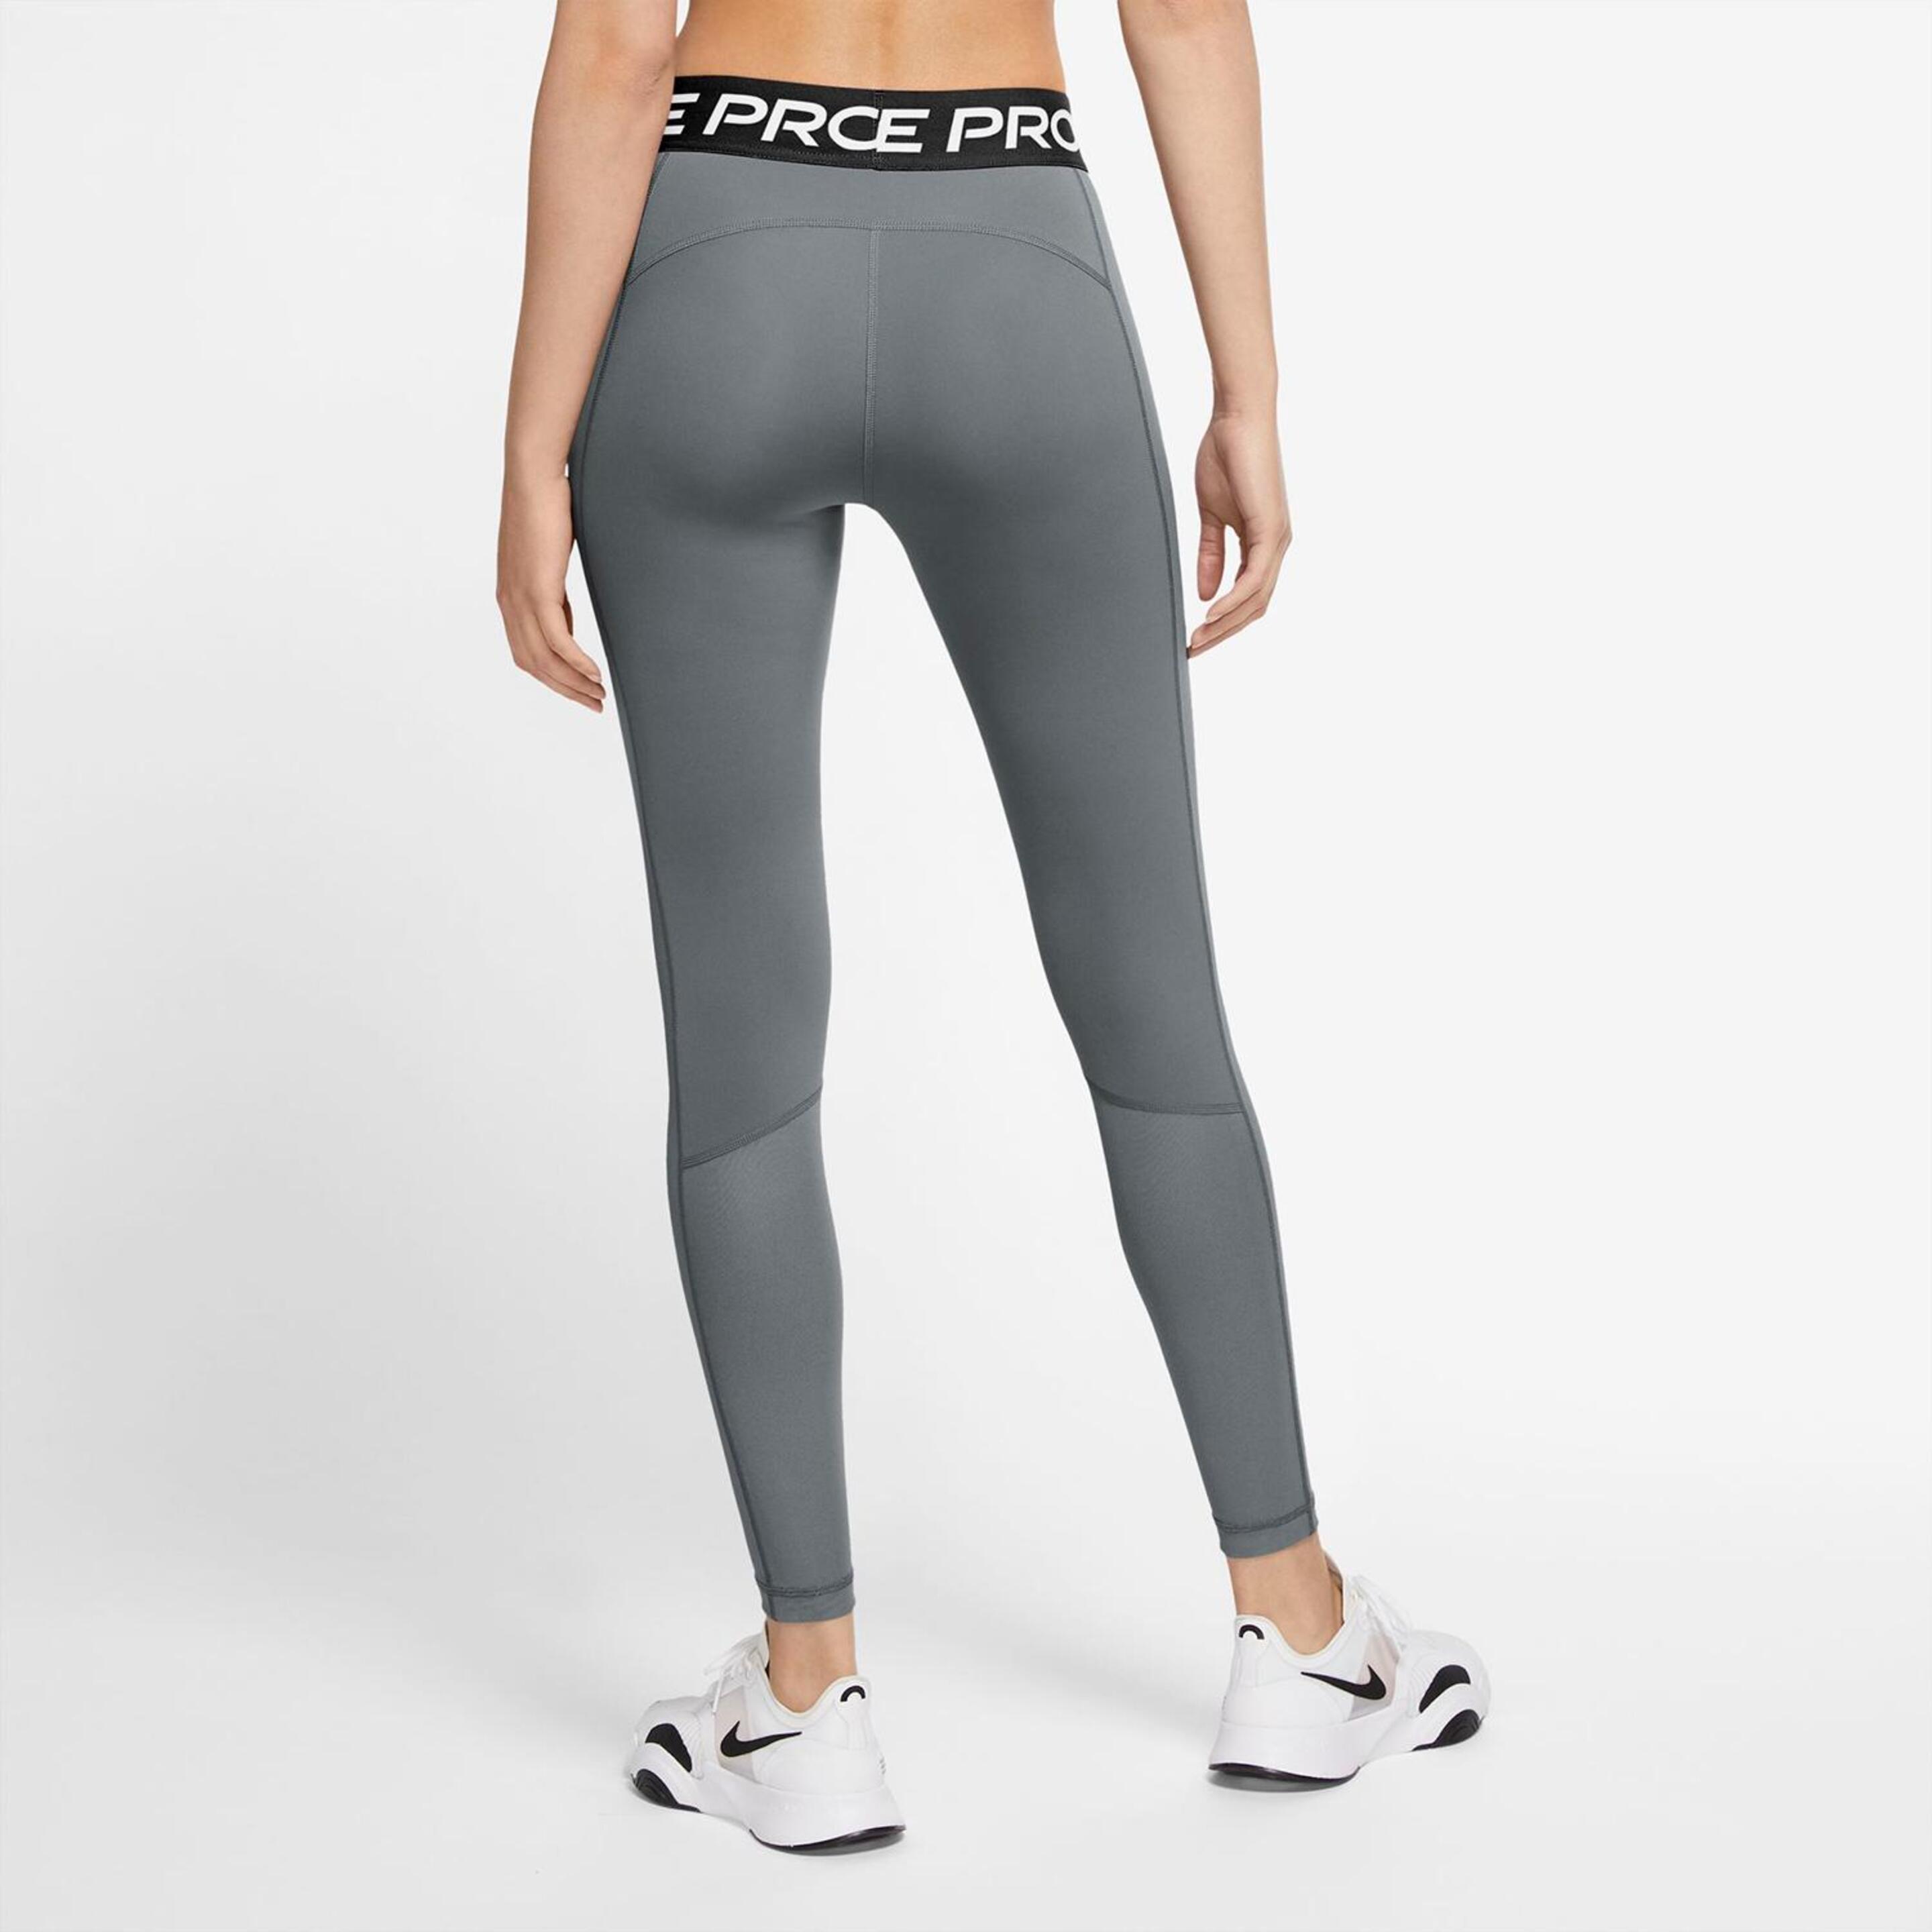 Mallas Fitness Nike - Gris - Mallas Largas Mujer